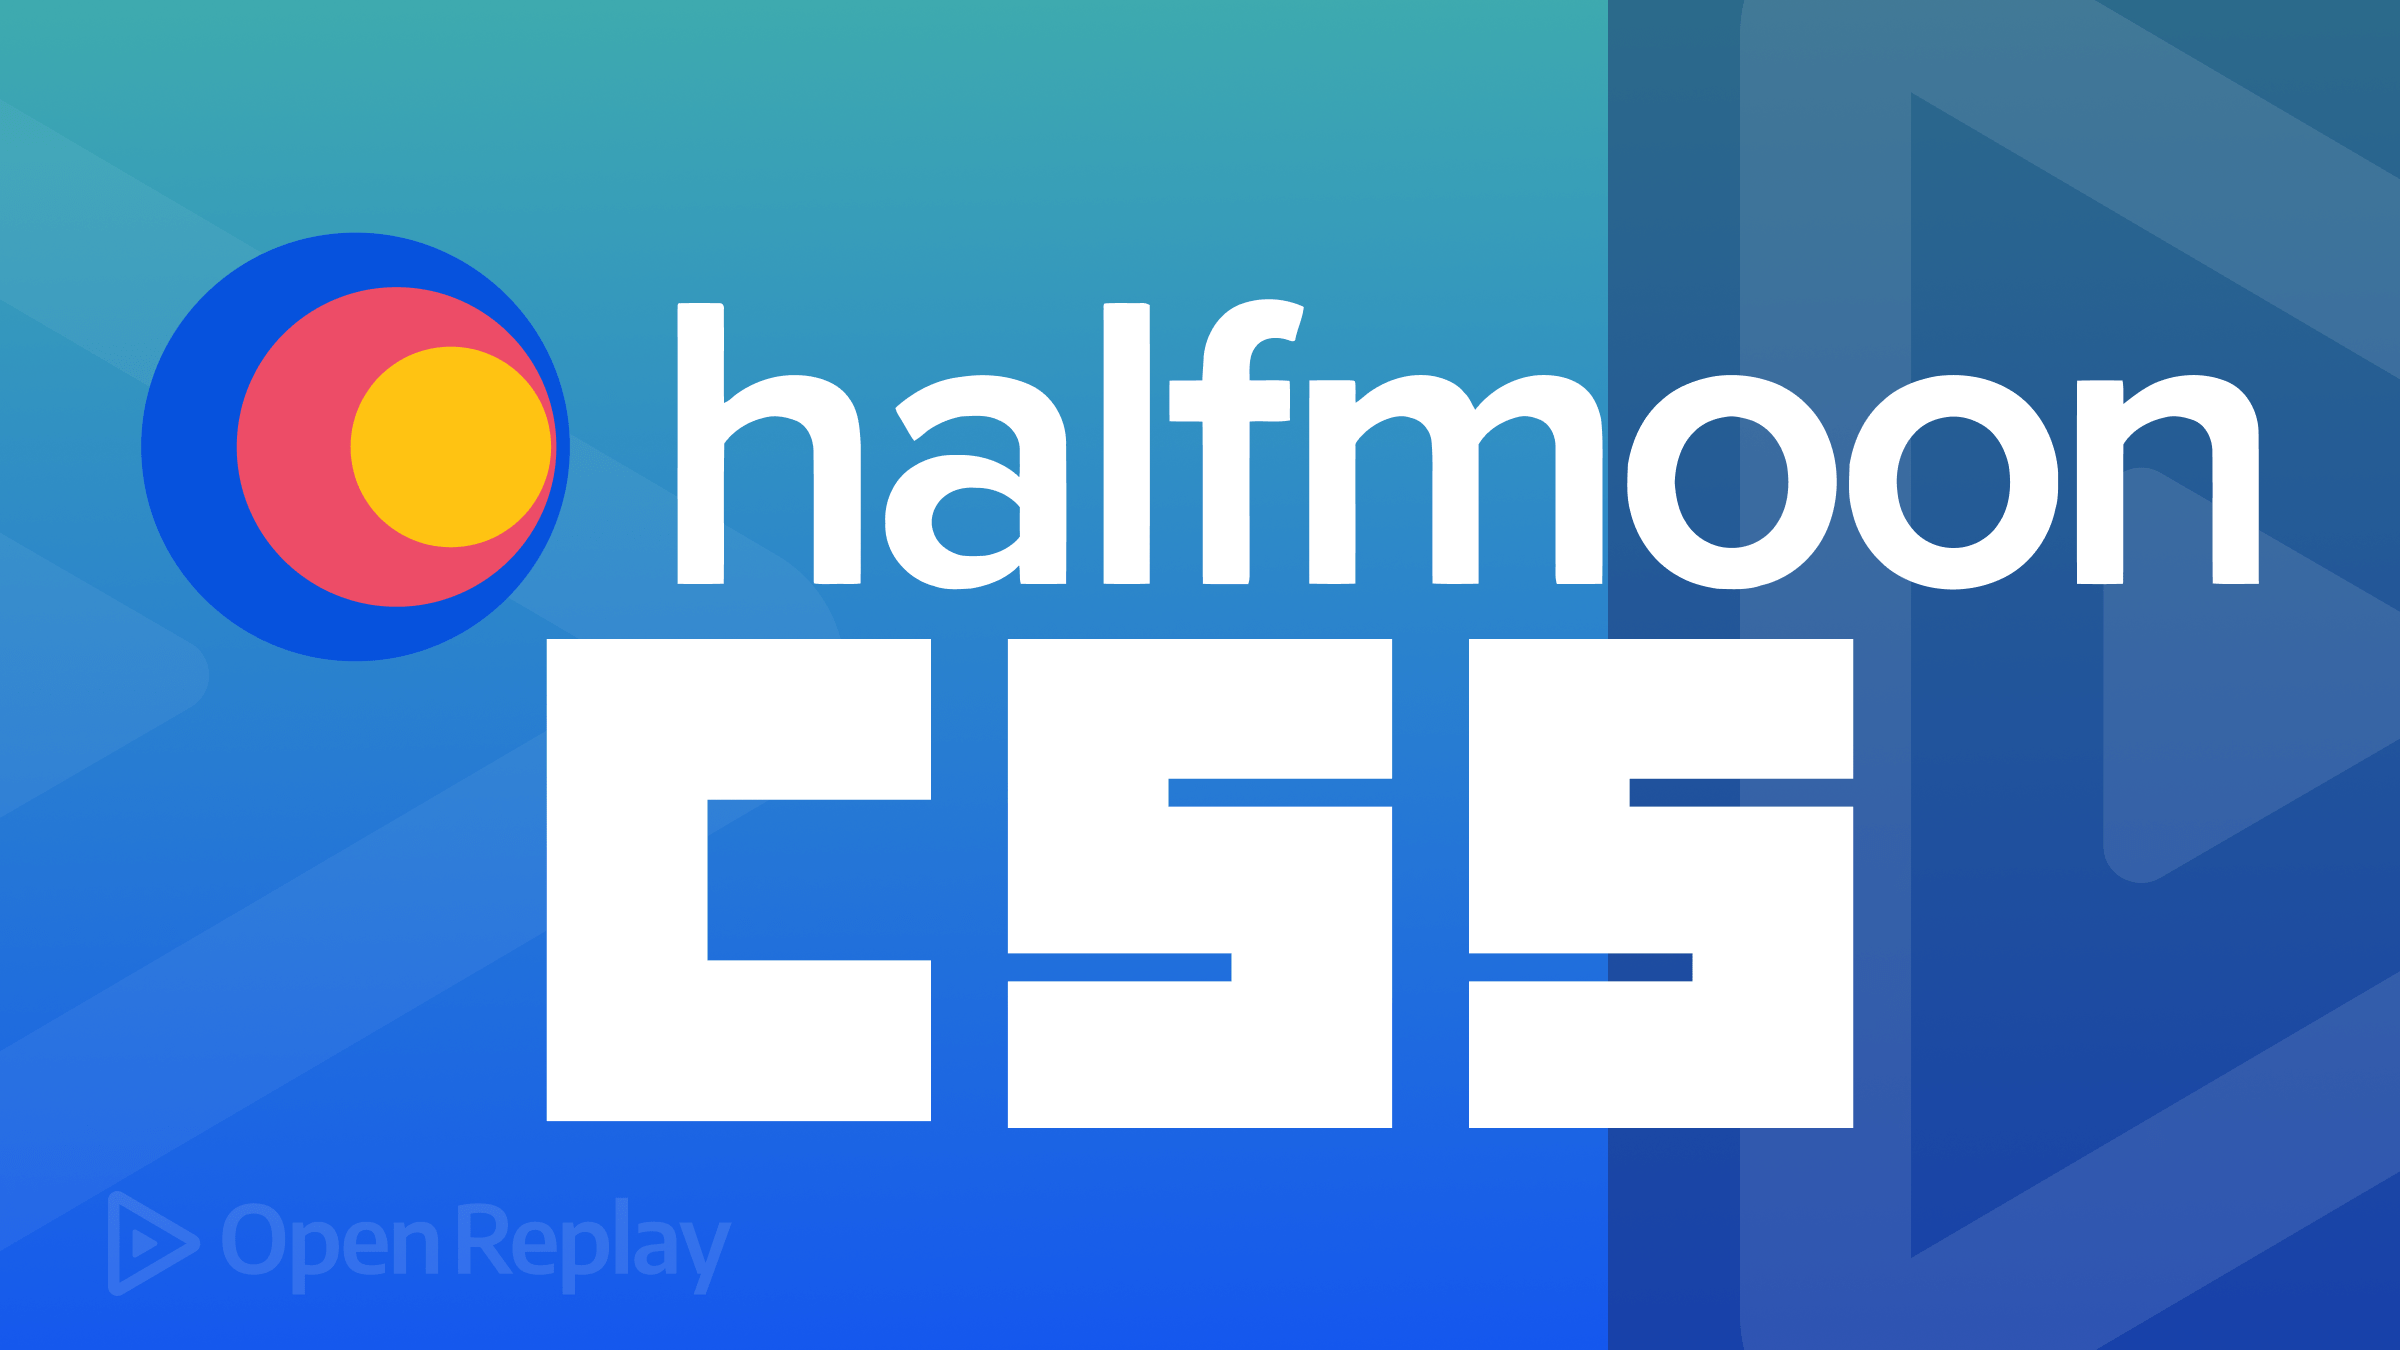 An Introduction to the Halfmoon CSS Framework